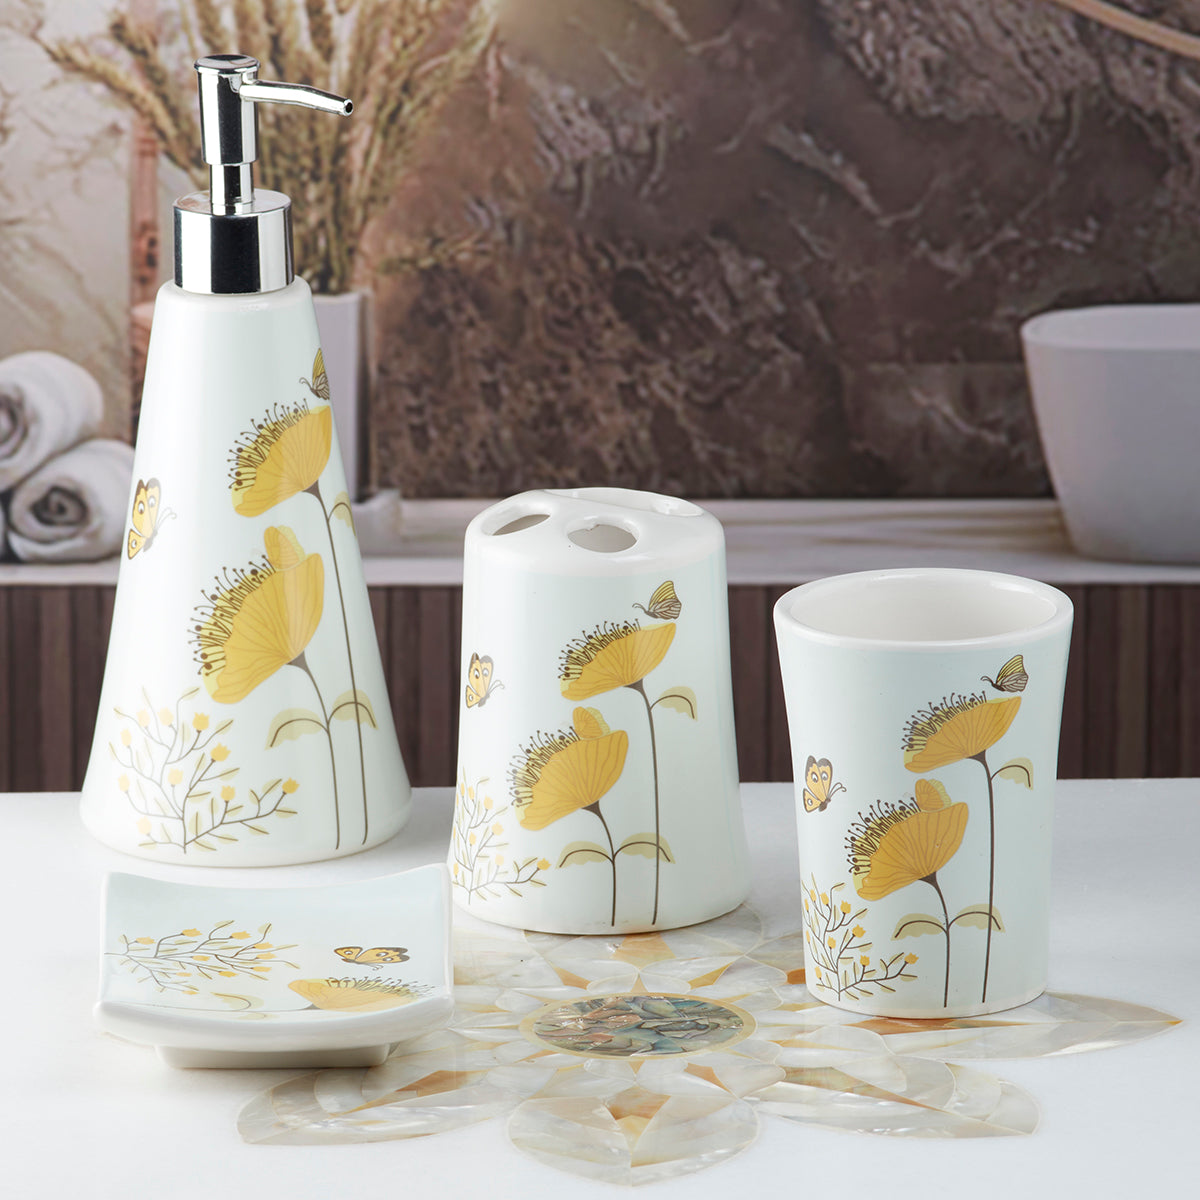 Ceramic Bathroom Accessories Set of 4 Bath Set with Soap Dispenser (8171)